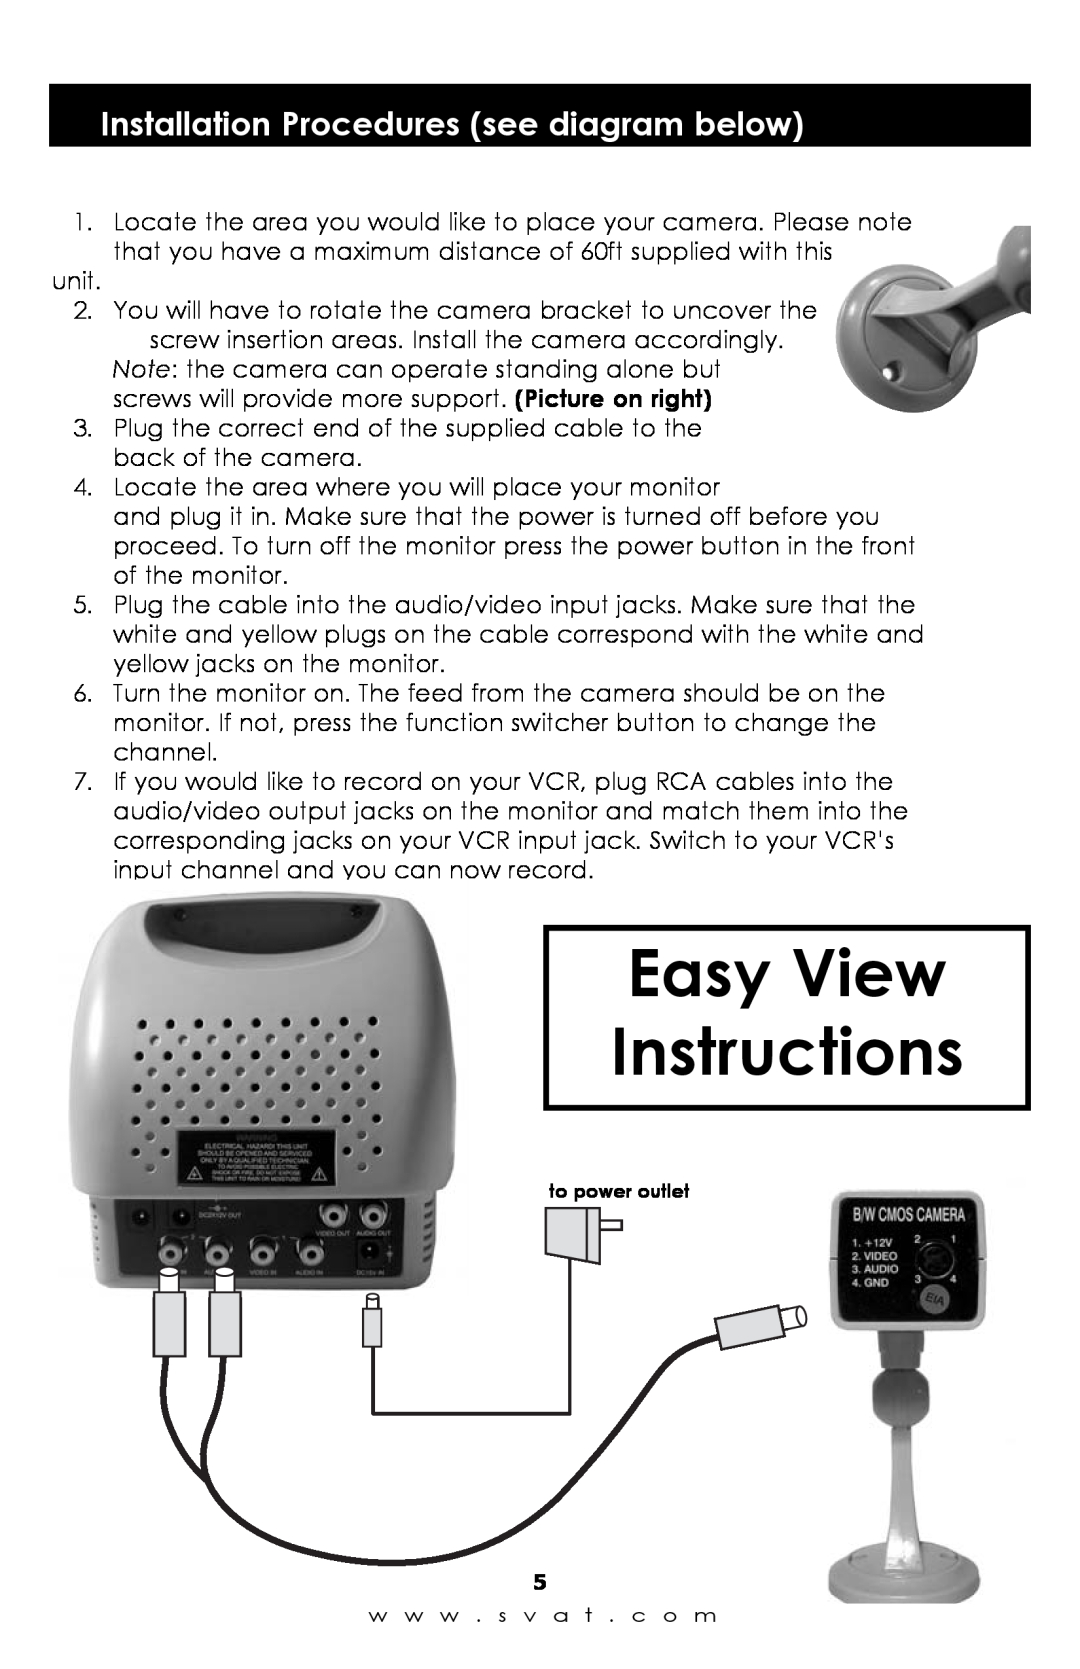 SVAT Electronics qxd600 instruction manual Easy View Instructions, Installation Procedures see diagram below 